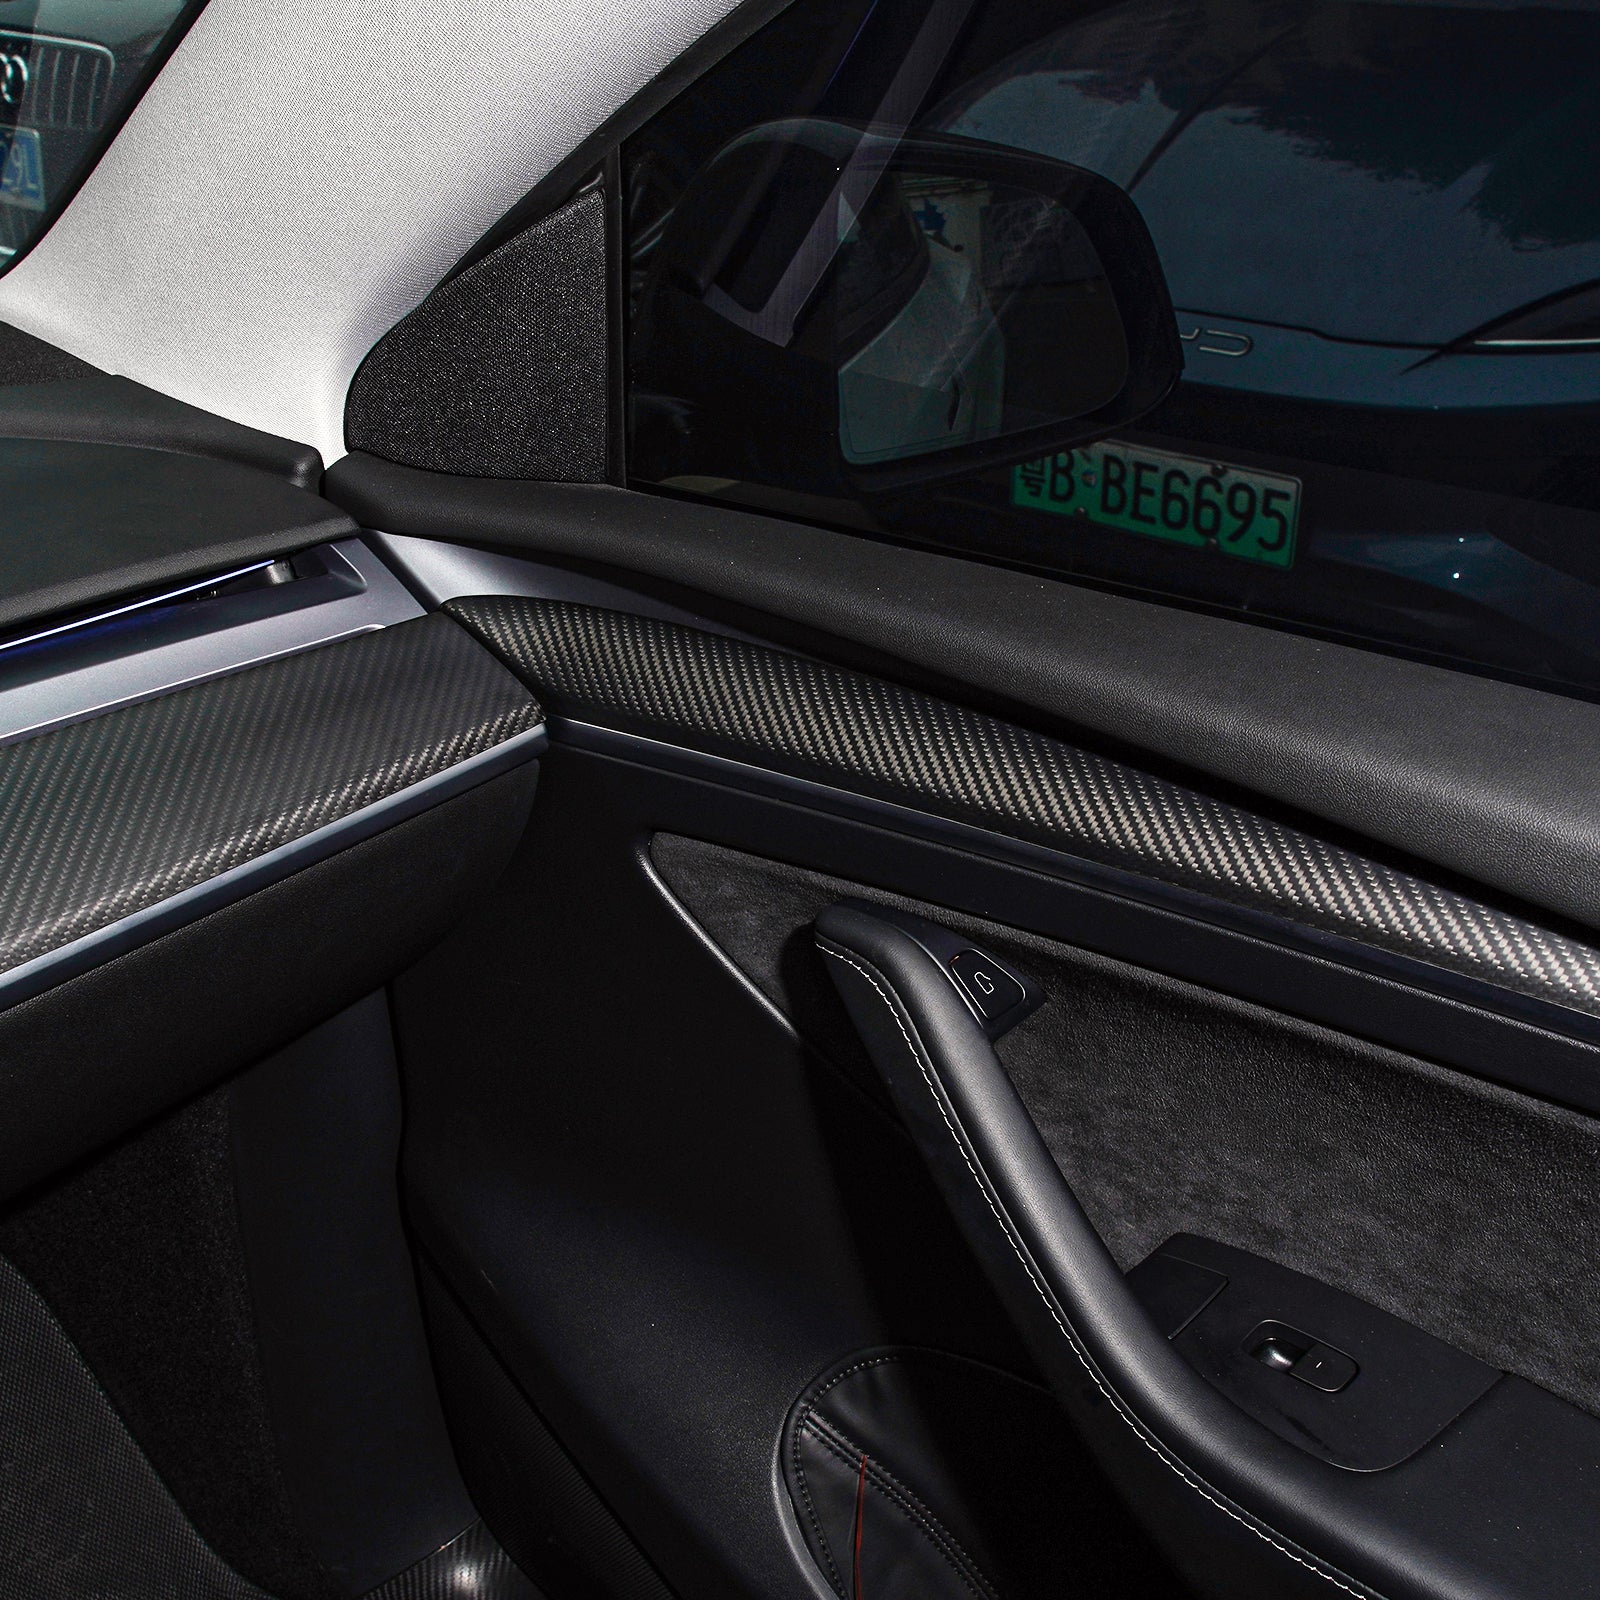 TESERY Model 3 / Y Door Panel Trim - Carbon Fiber Interior Mods【2pcs】 - Tesery Official Store